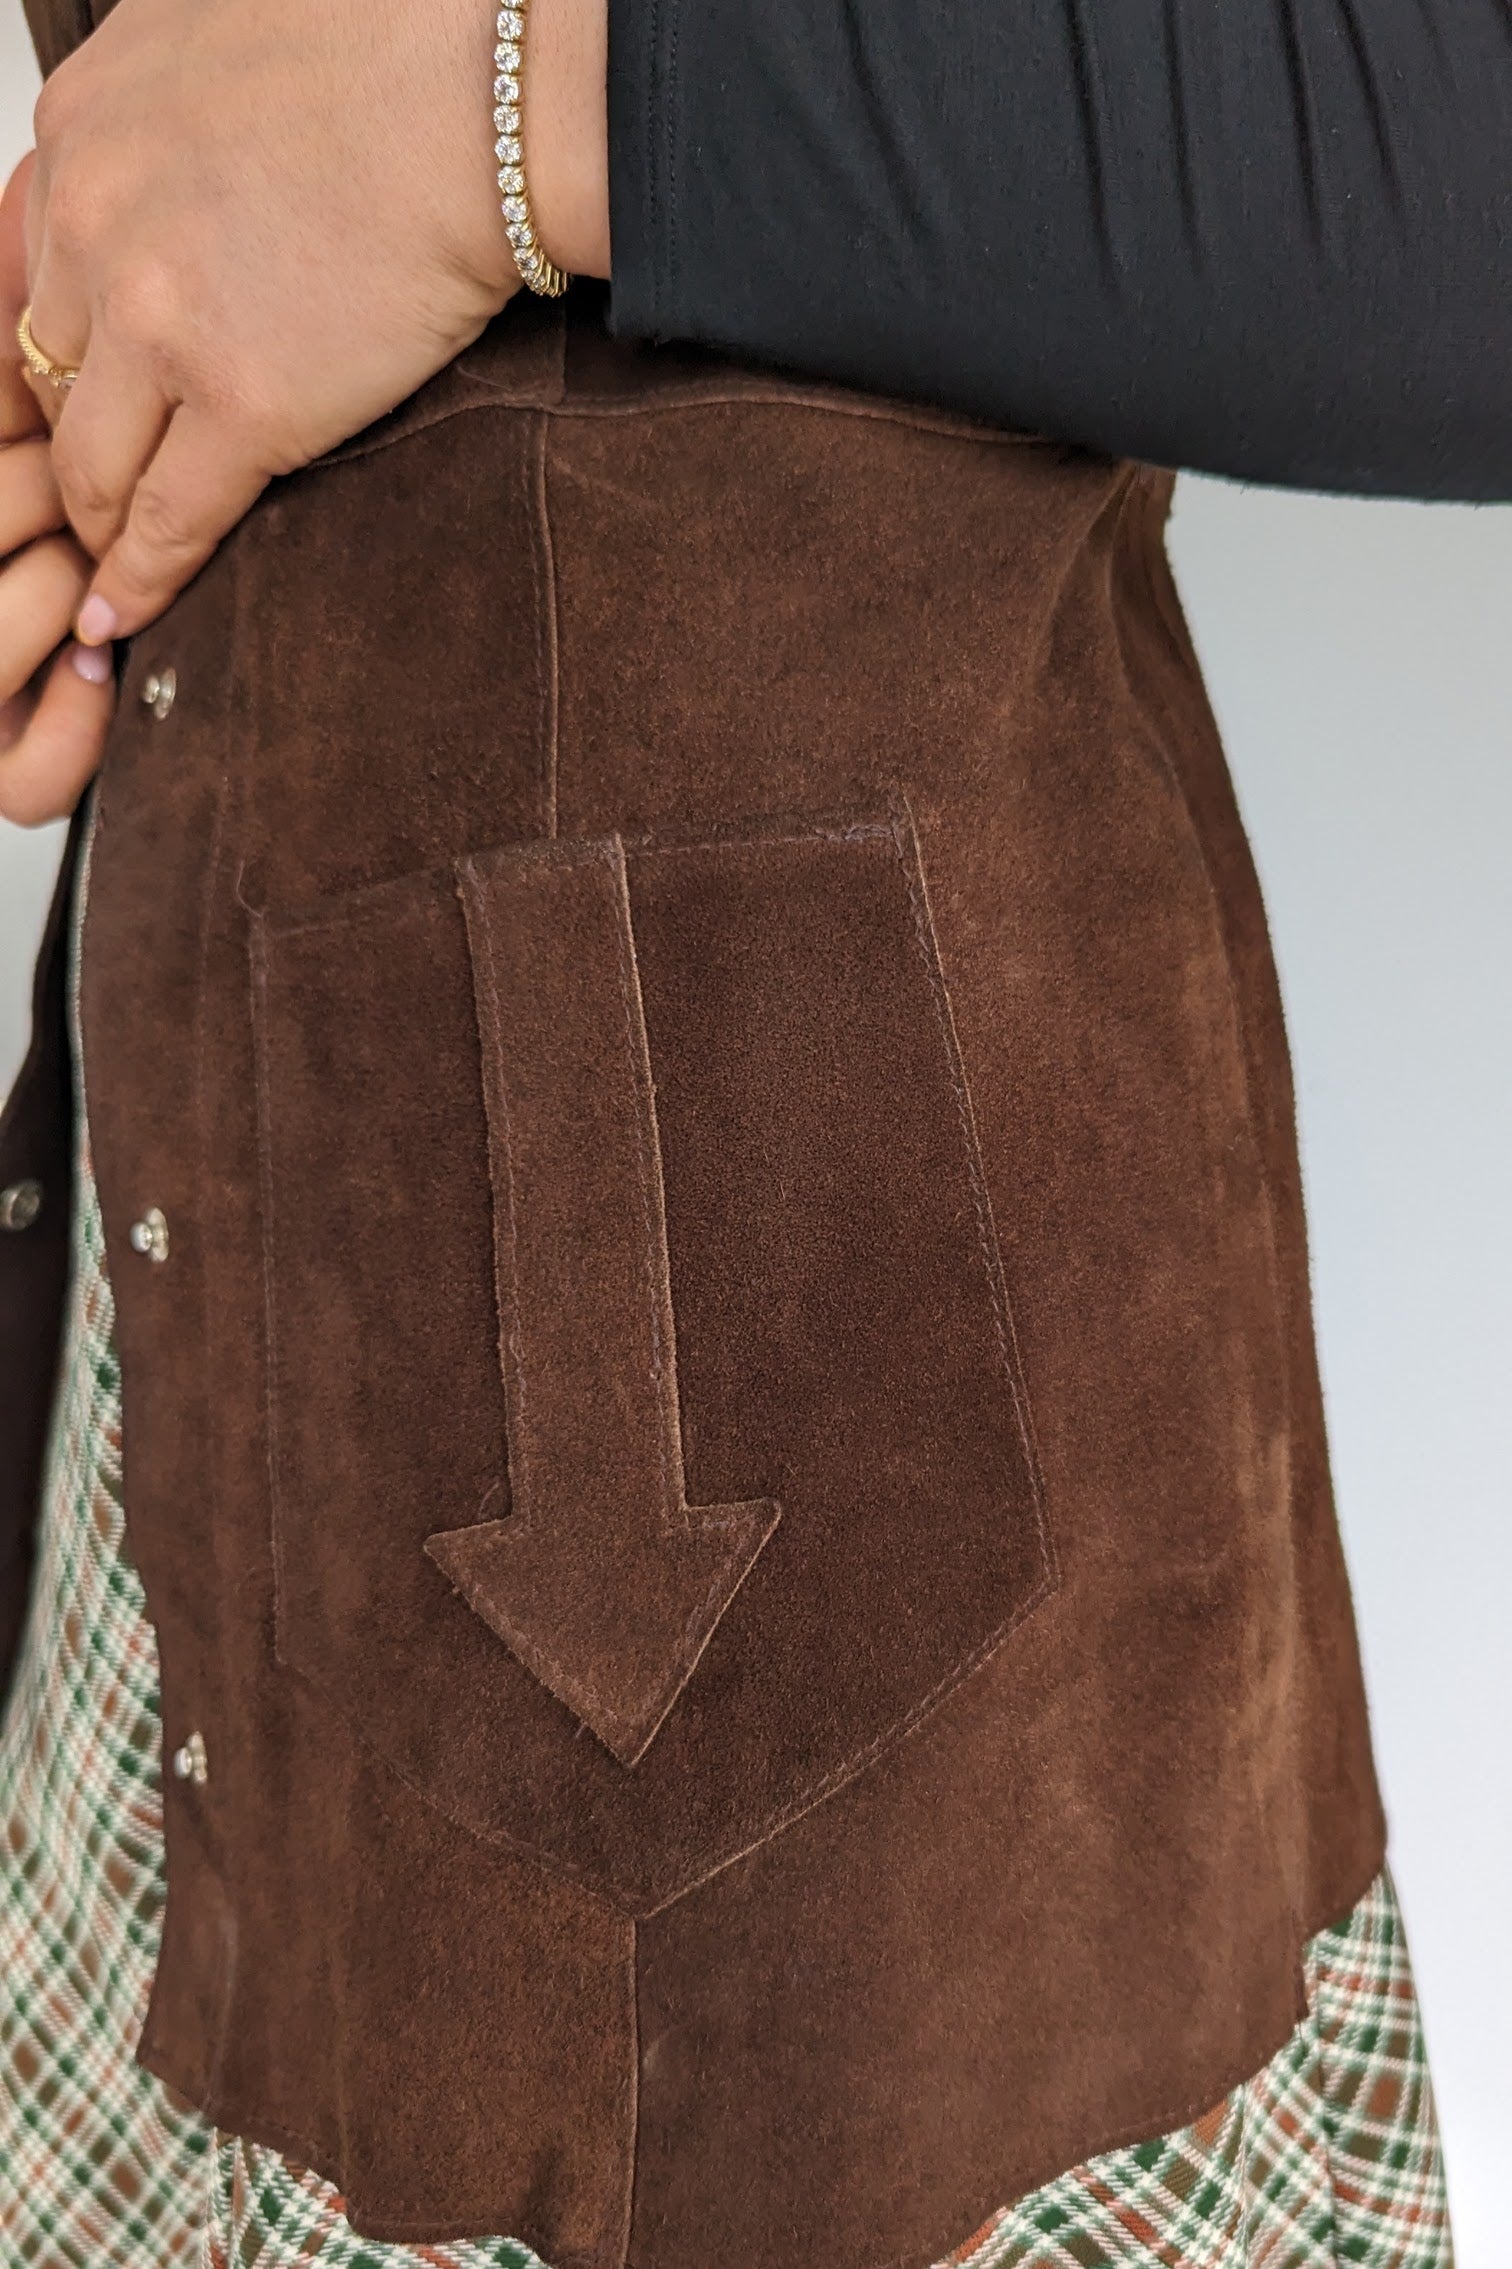 arrow on pocket of suede waistcoat